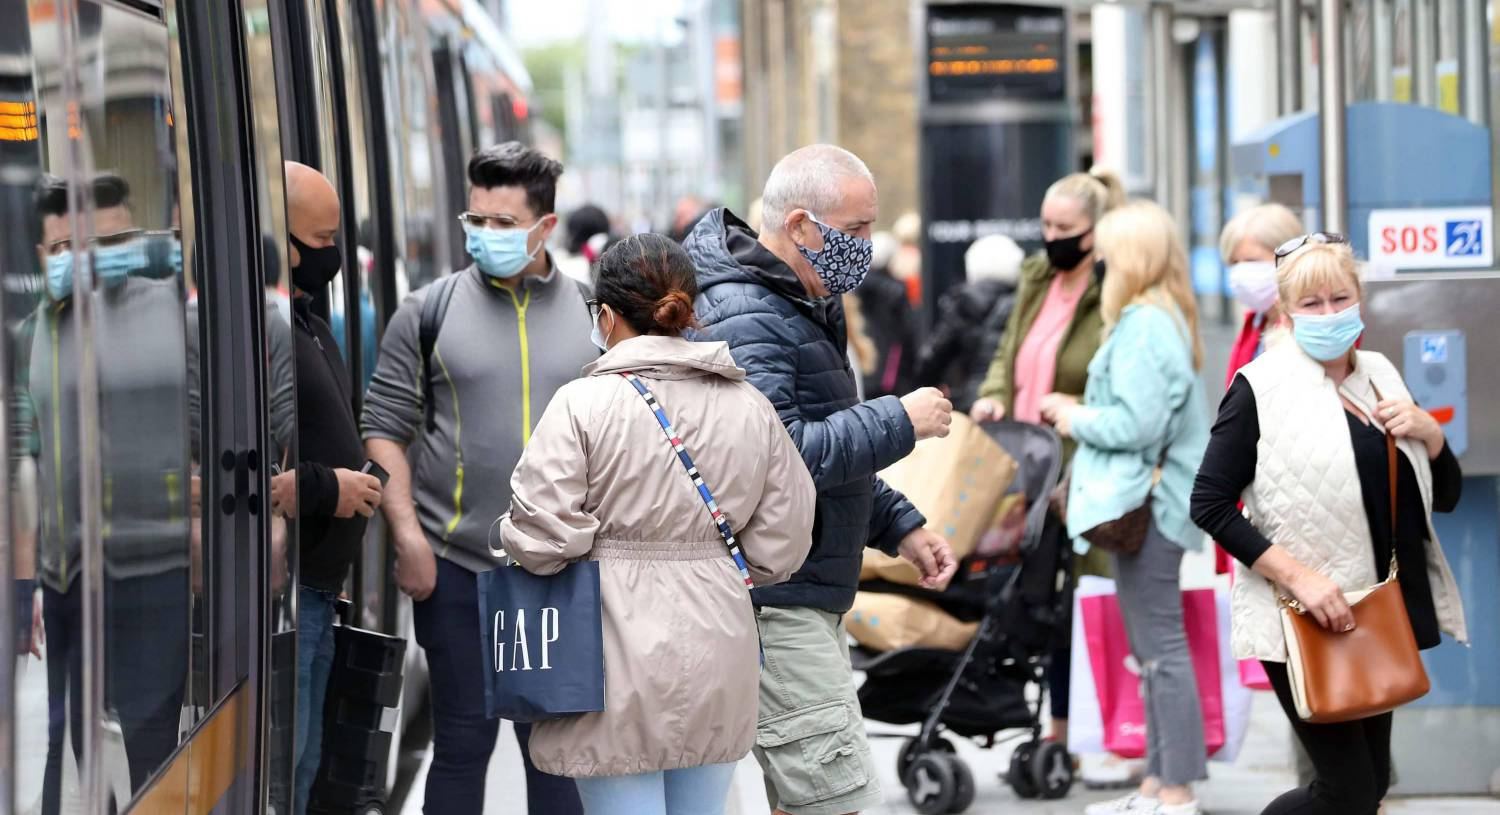 Wearing mask on public transport becomes mandatory in Ireland